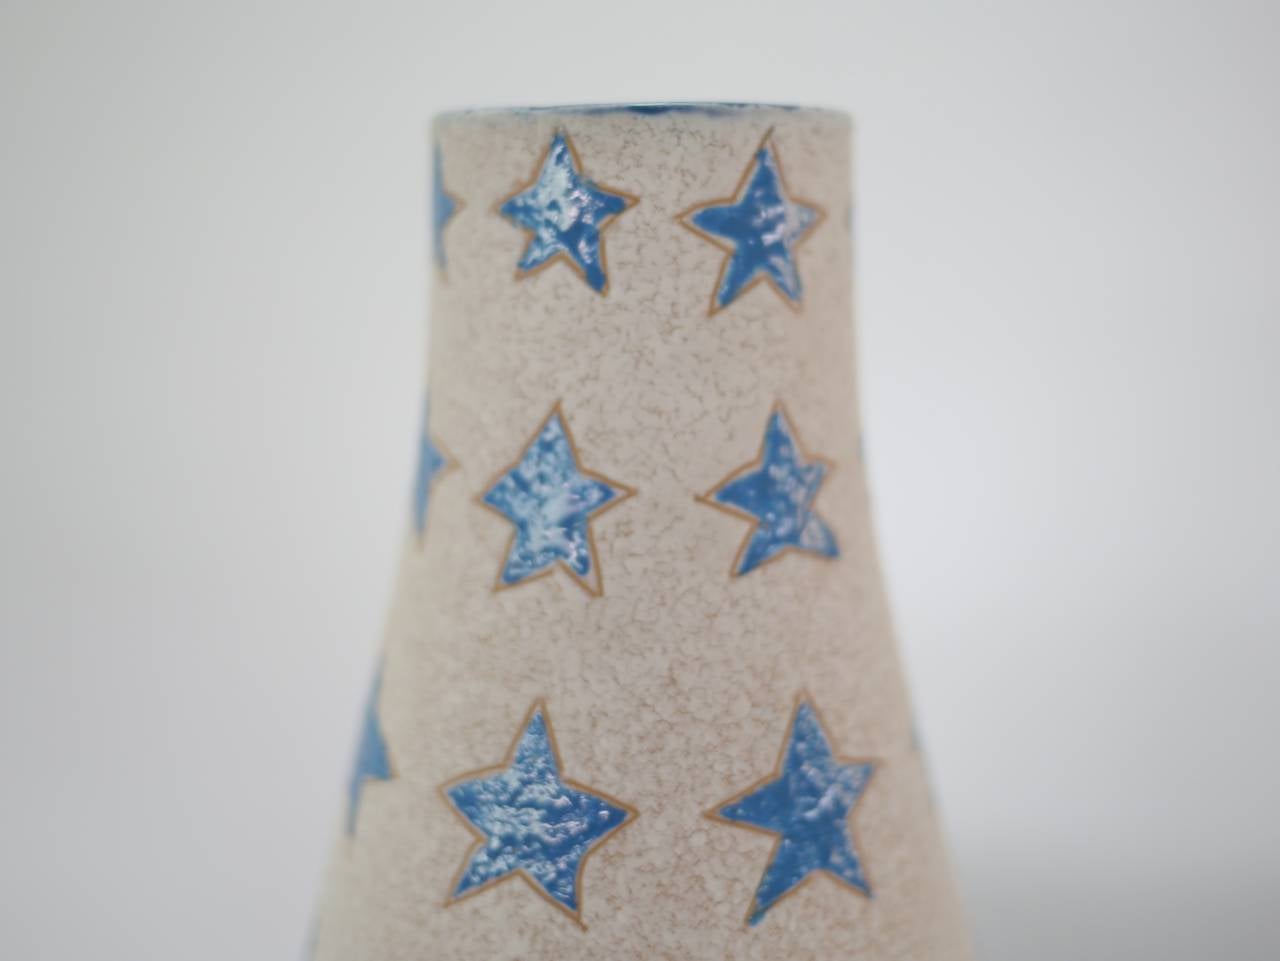 Italian Pop Art vase. Having a lava glaze surface with blue stars. Marked 